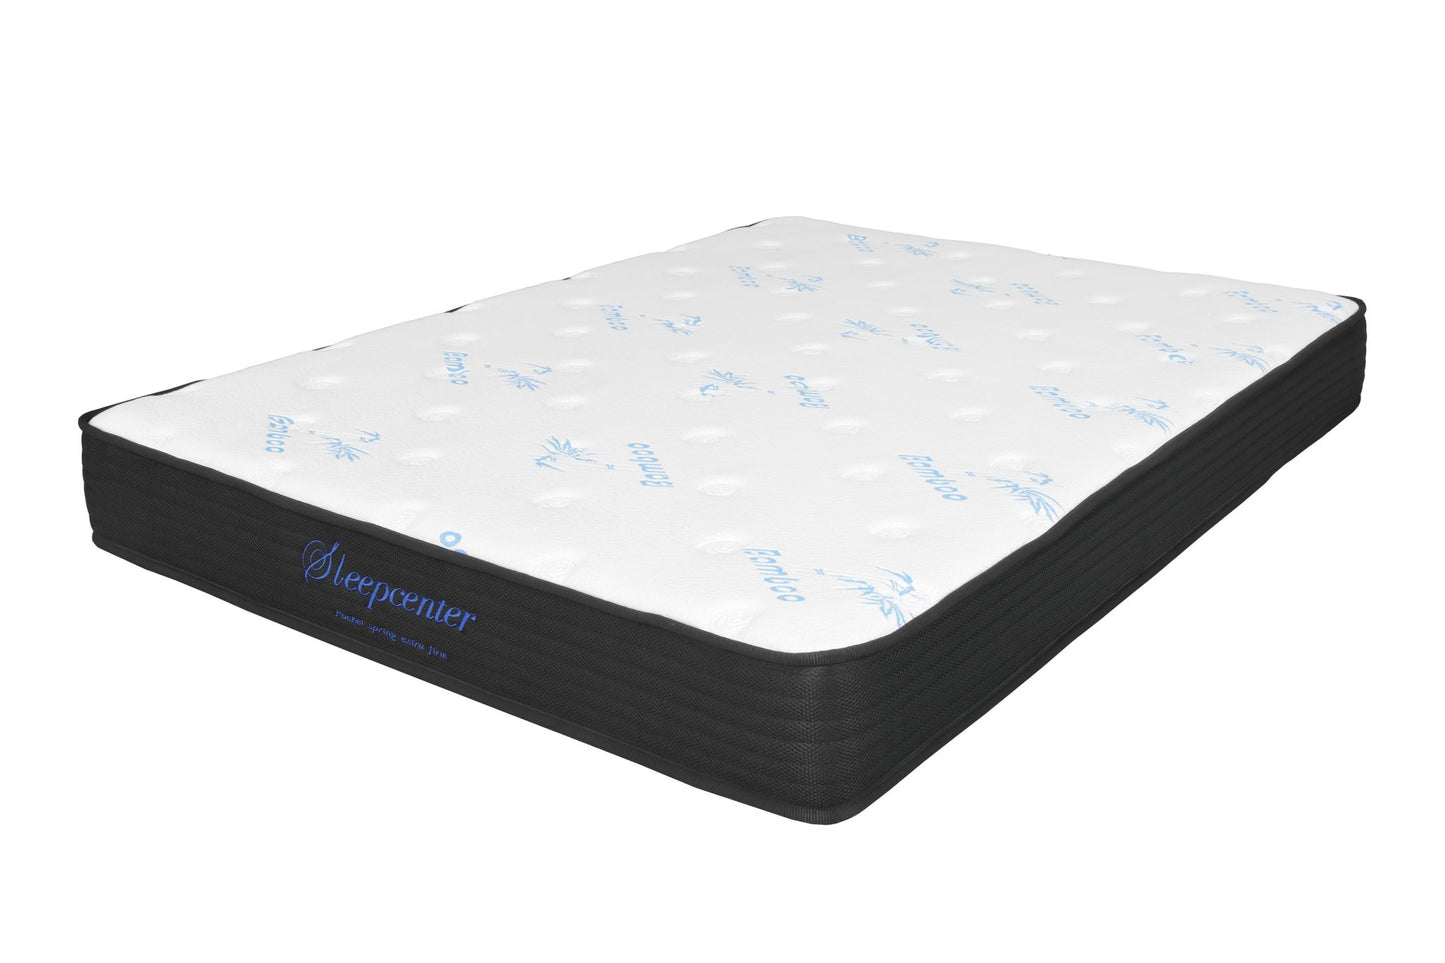 Sleepcenter Single 5 Zone Pocket Spring Mattress & Bed frame with headboard